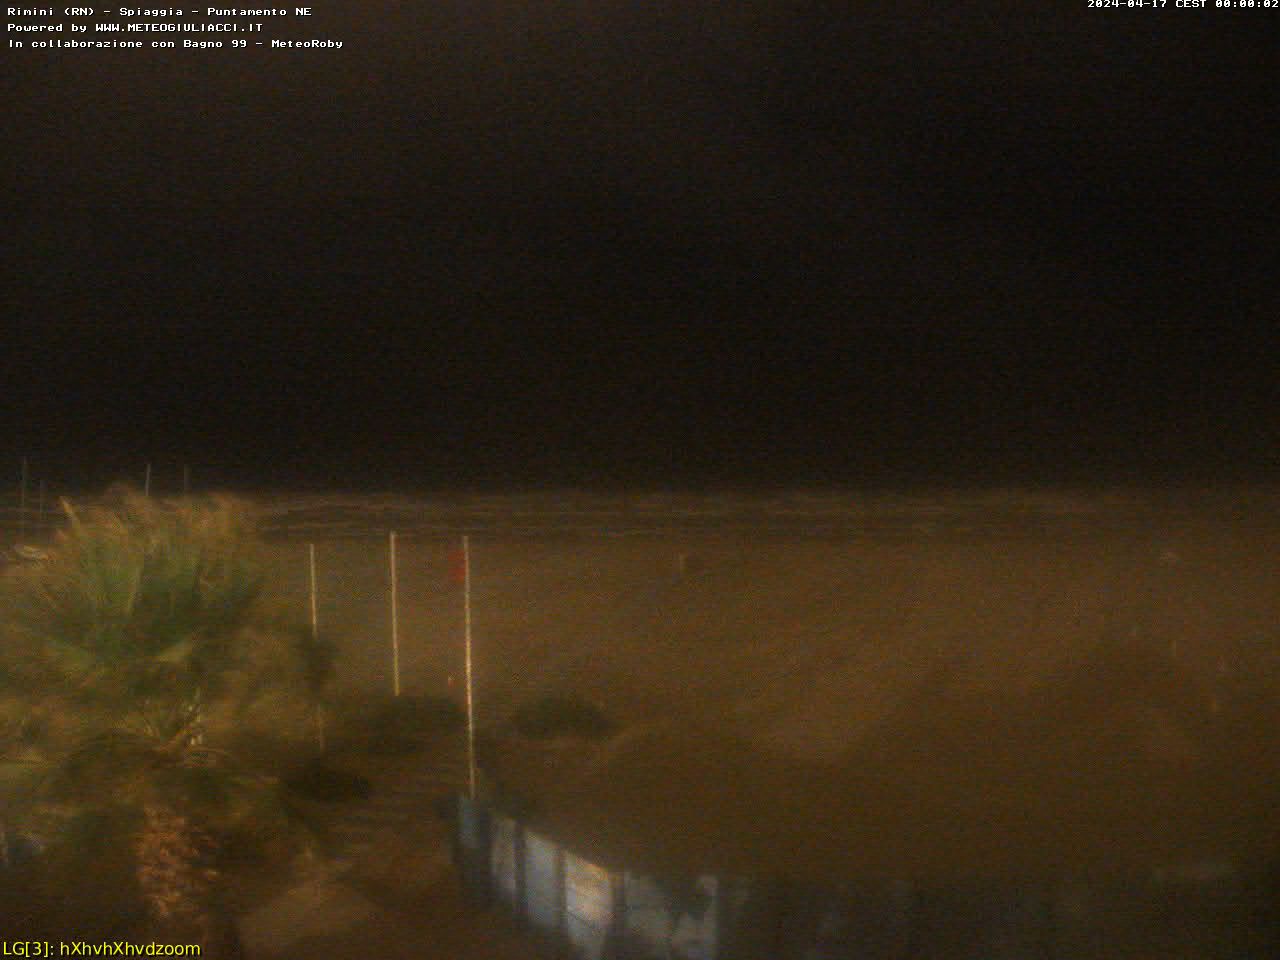 webcam Rimini - Bagno 99 Loretta MeteoRoby (RN)